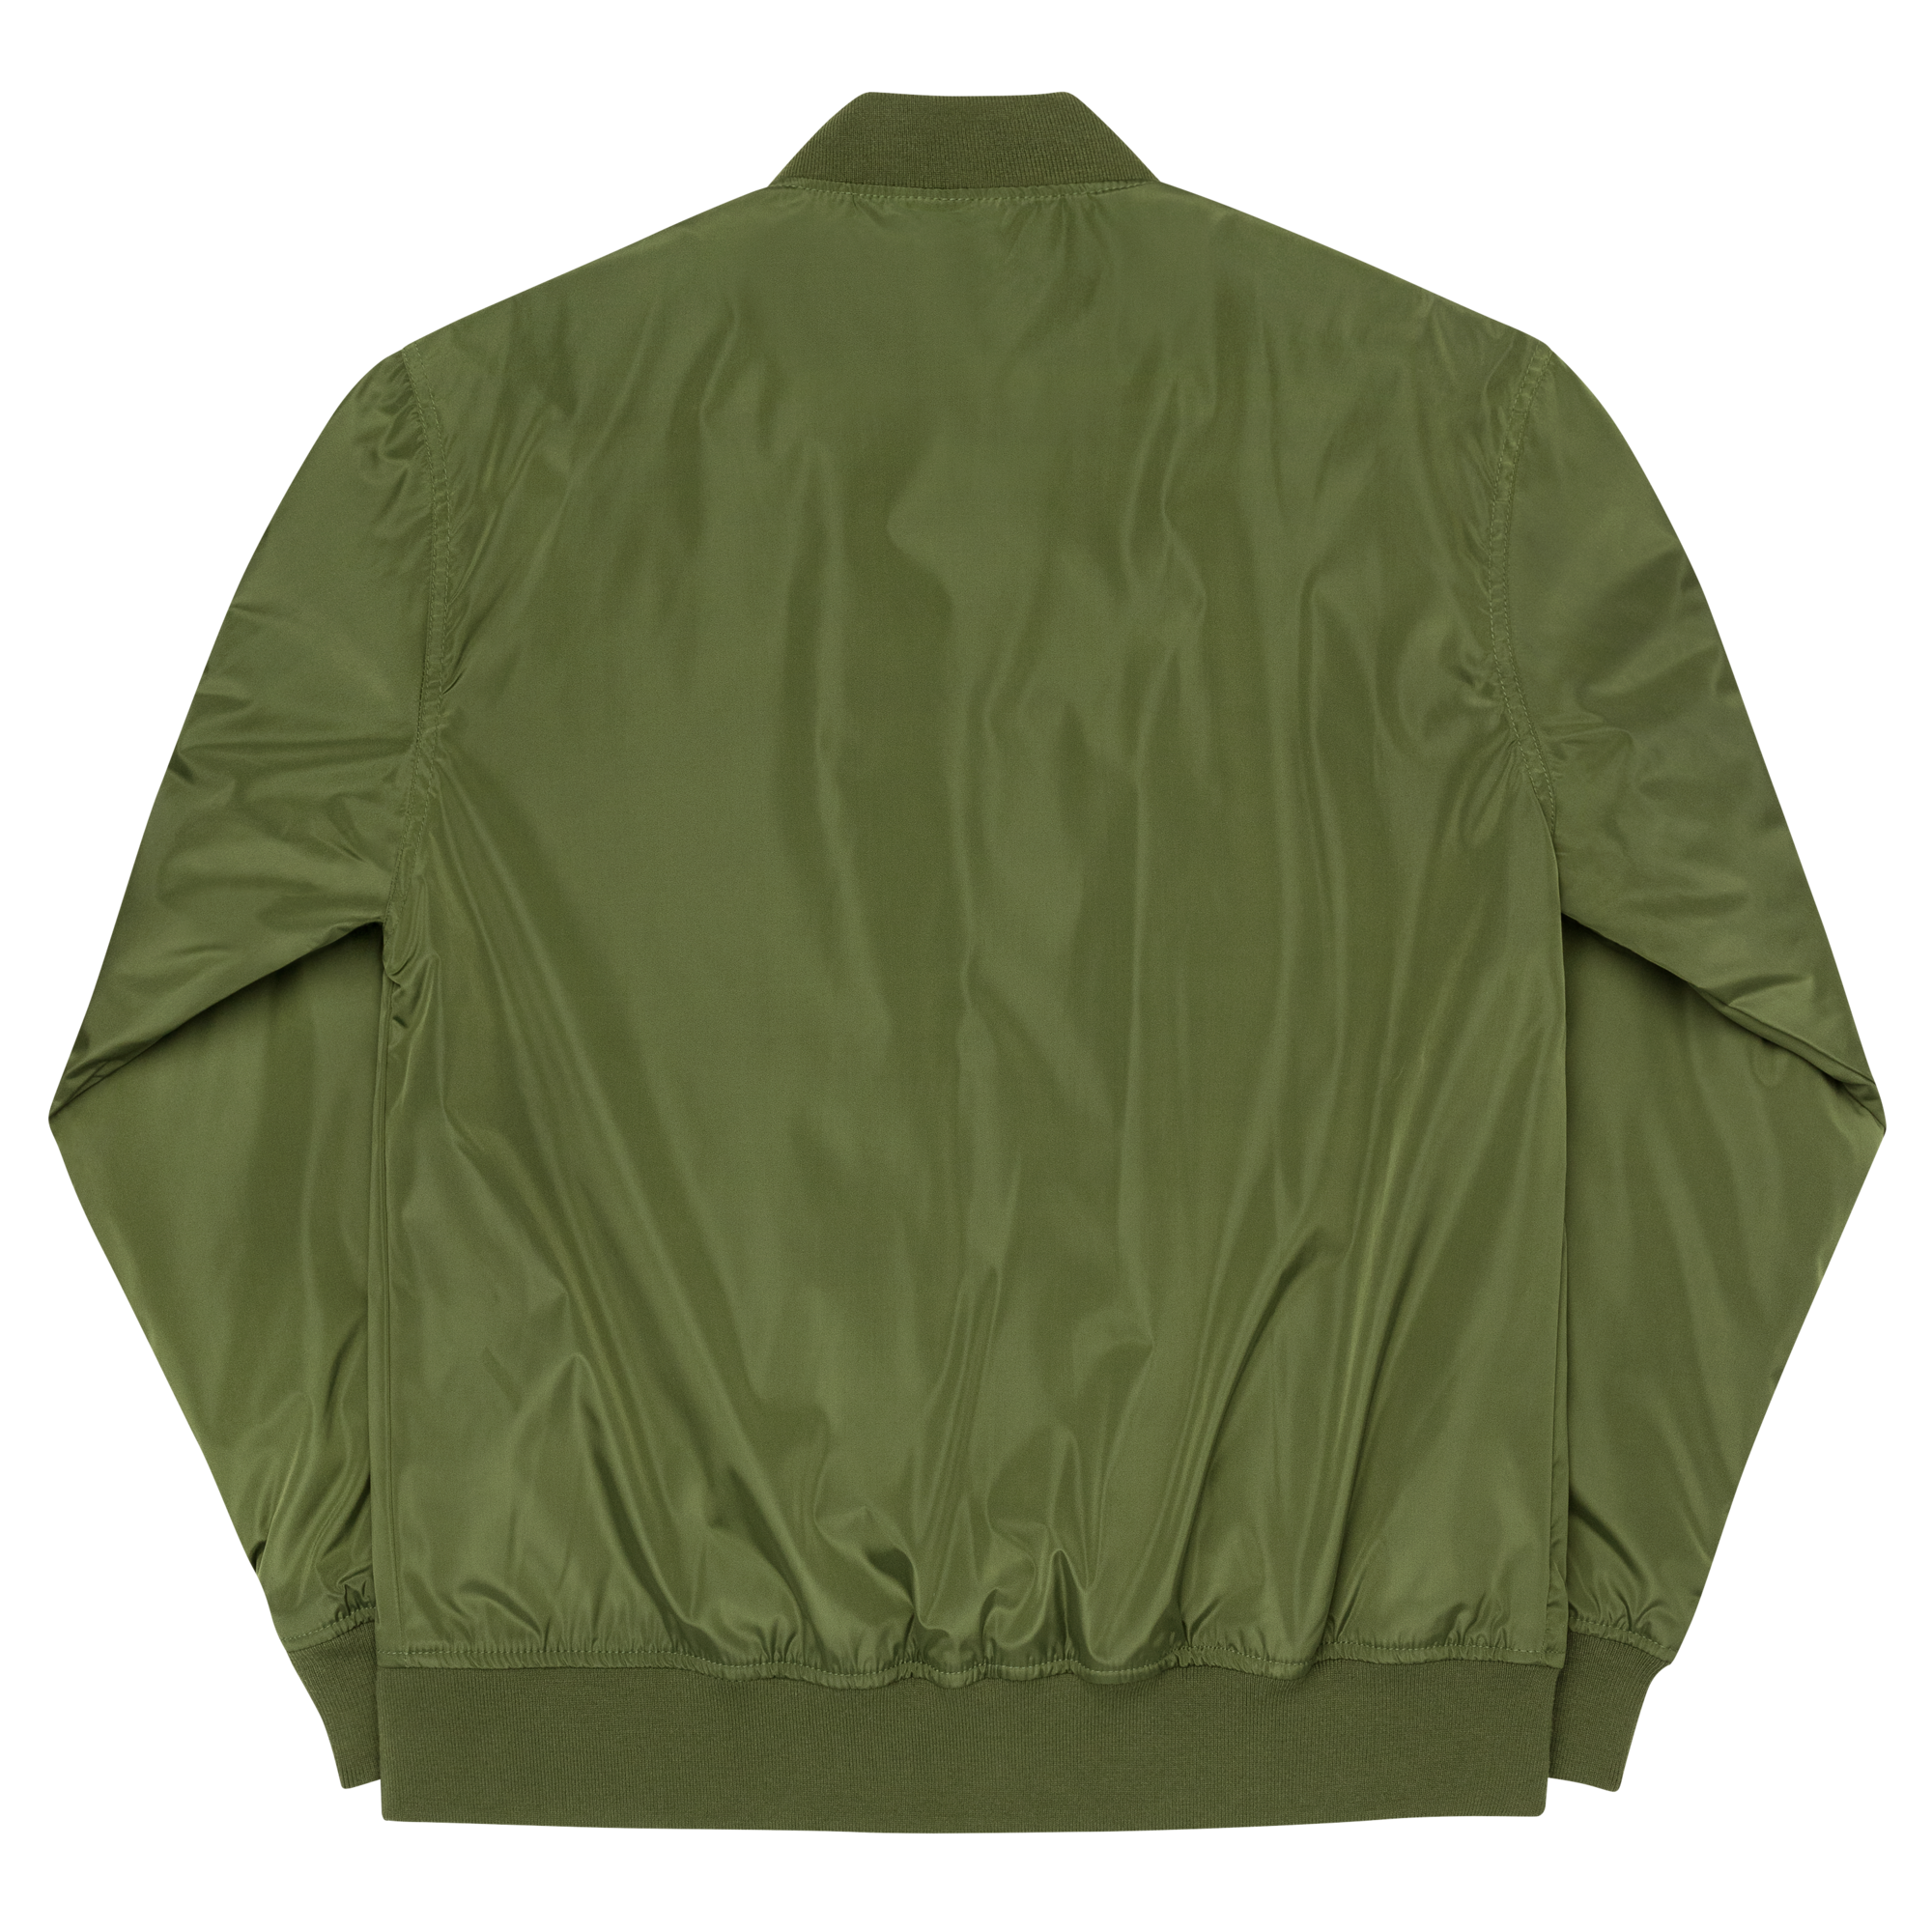 Sociedad Secreta Premium bomber jacket